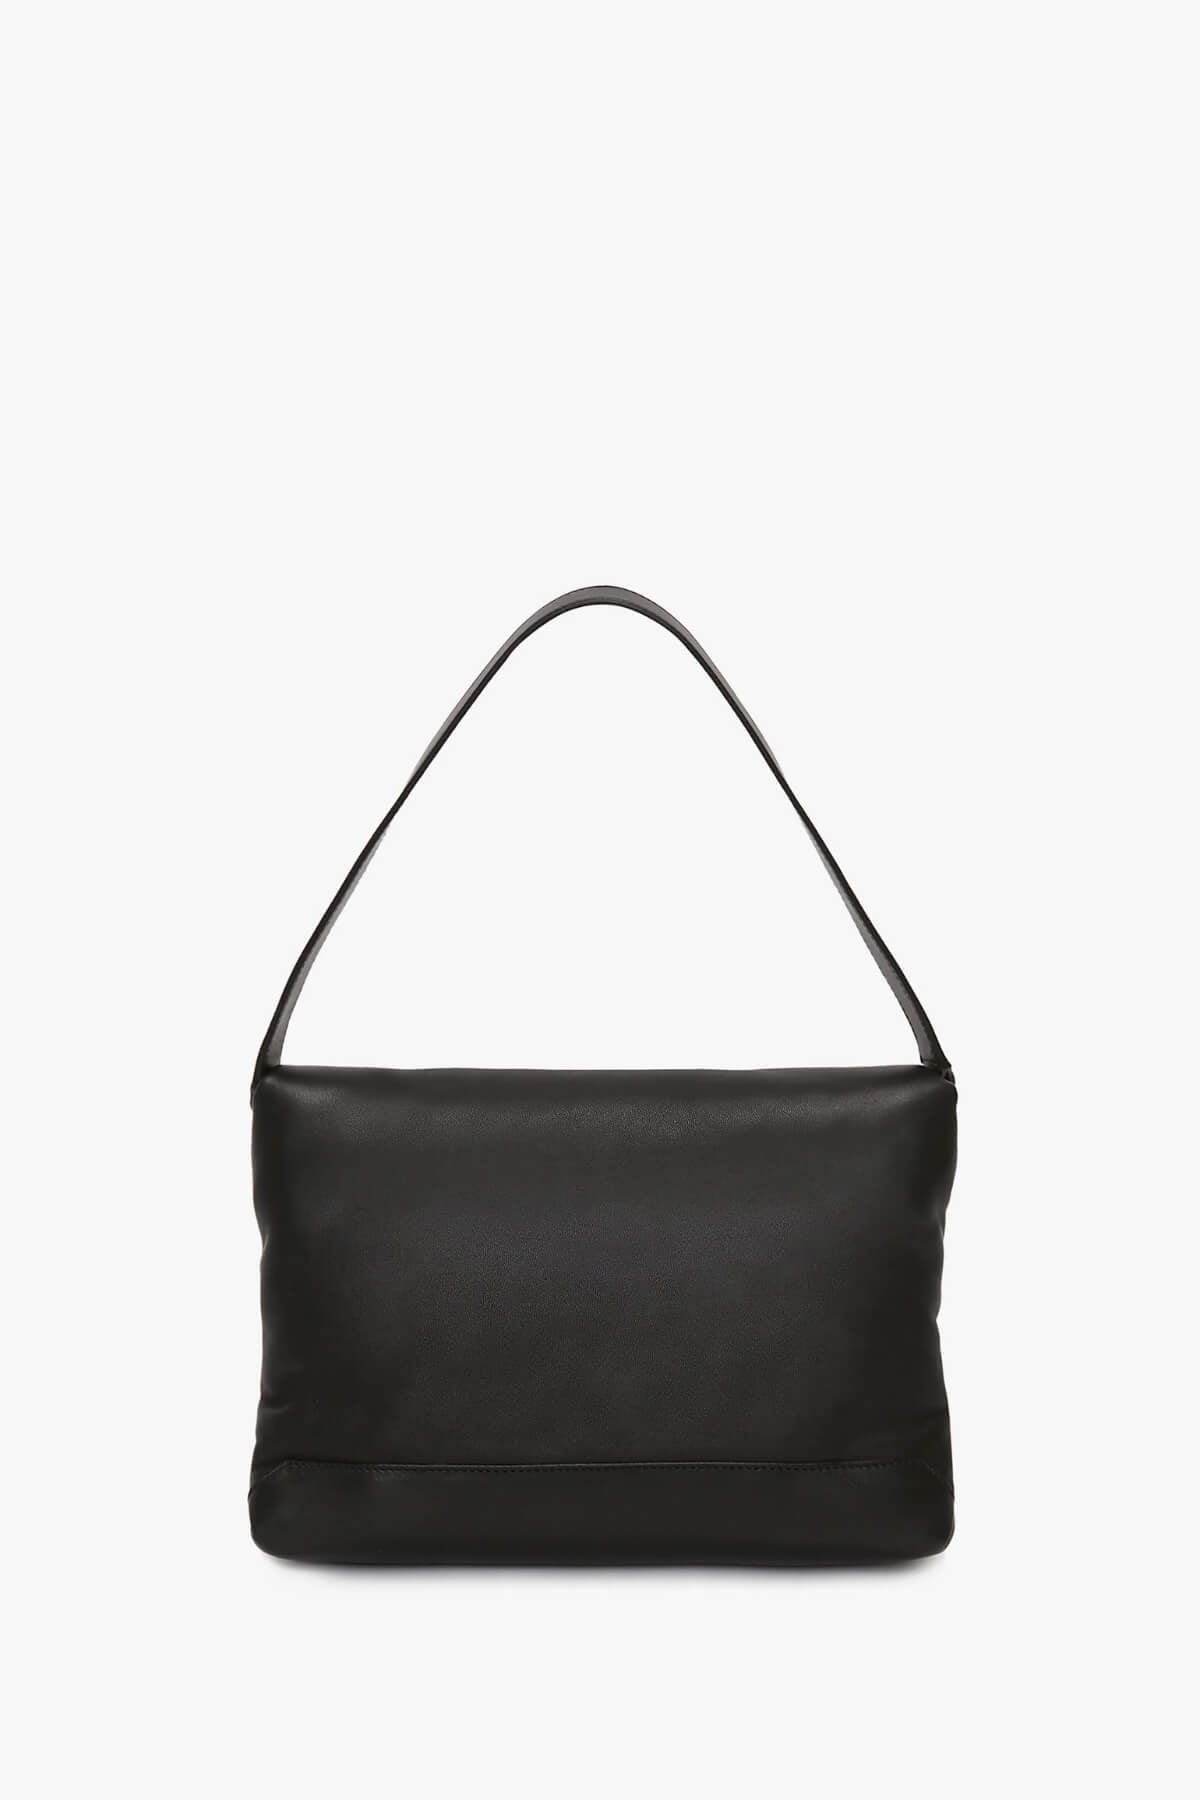 Victoria Beckham Puffy Chain Pouch Bag - Black